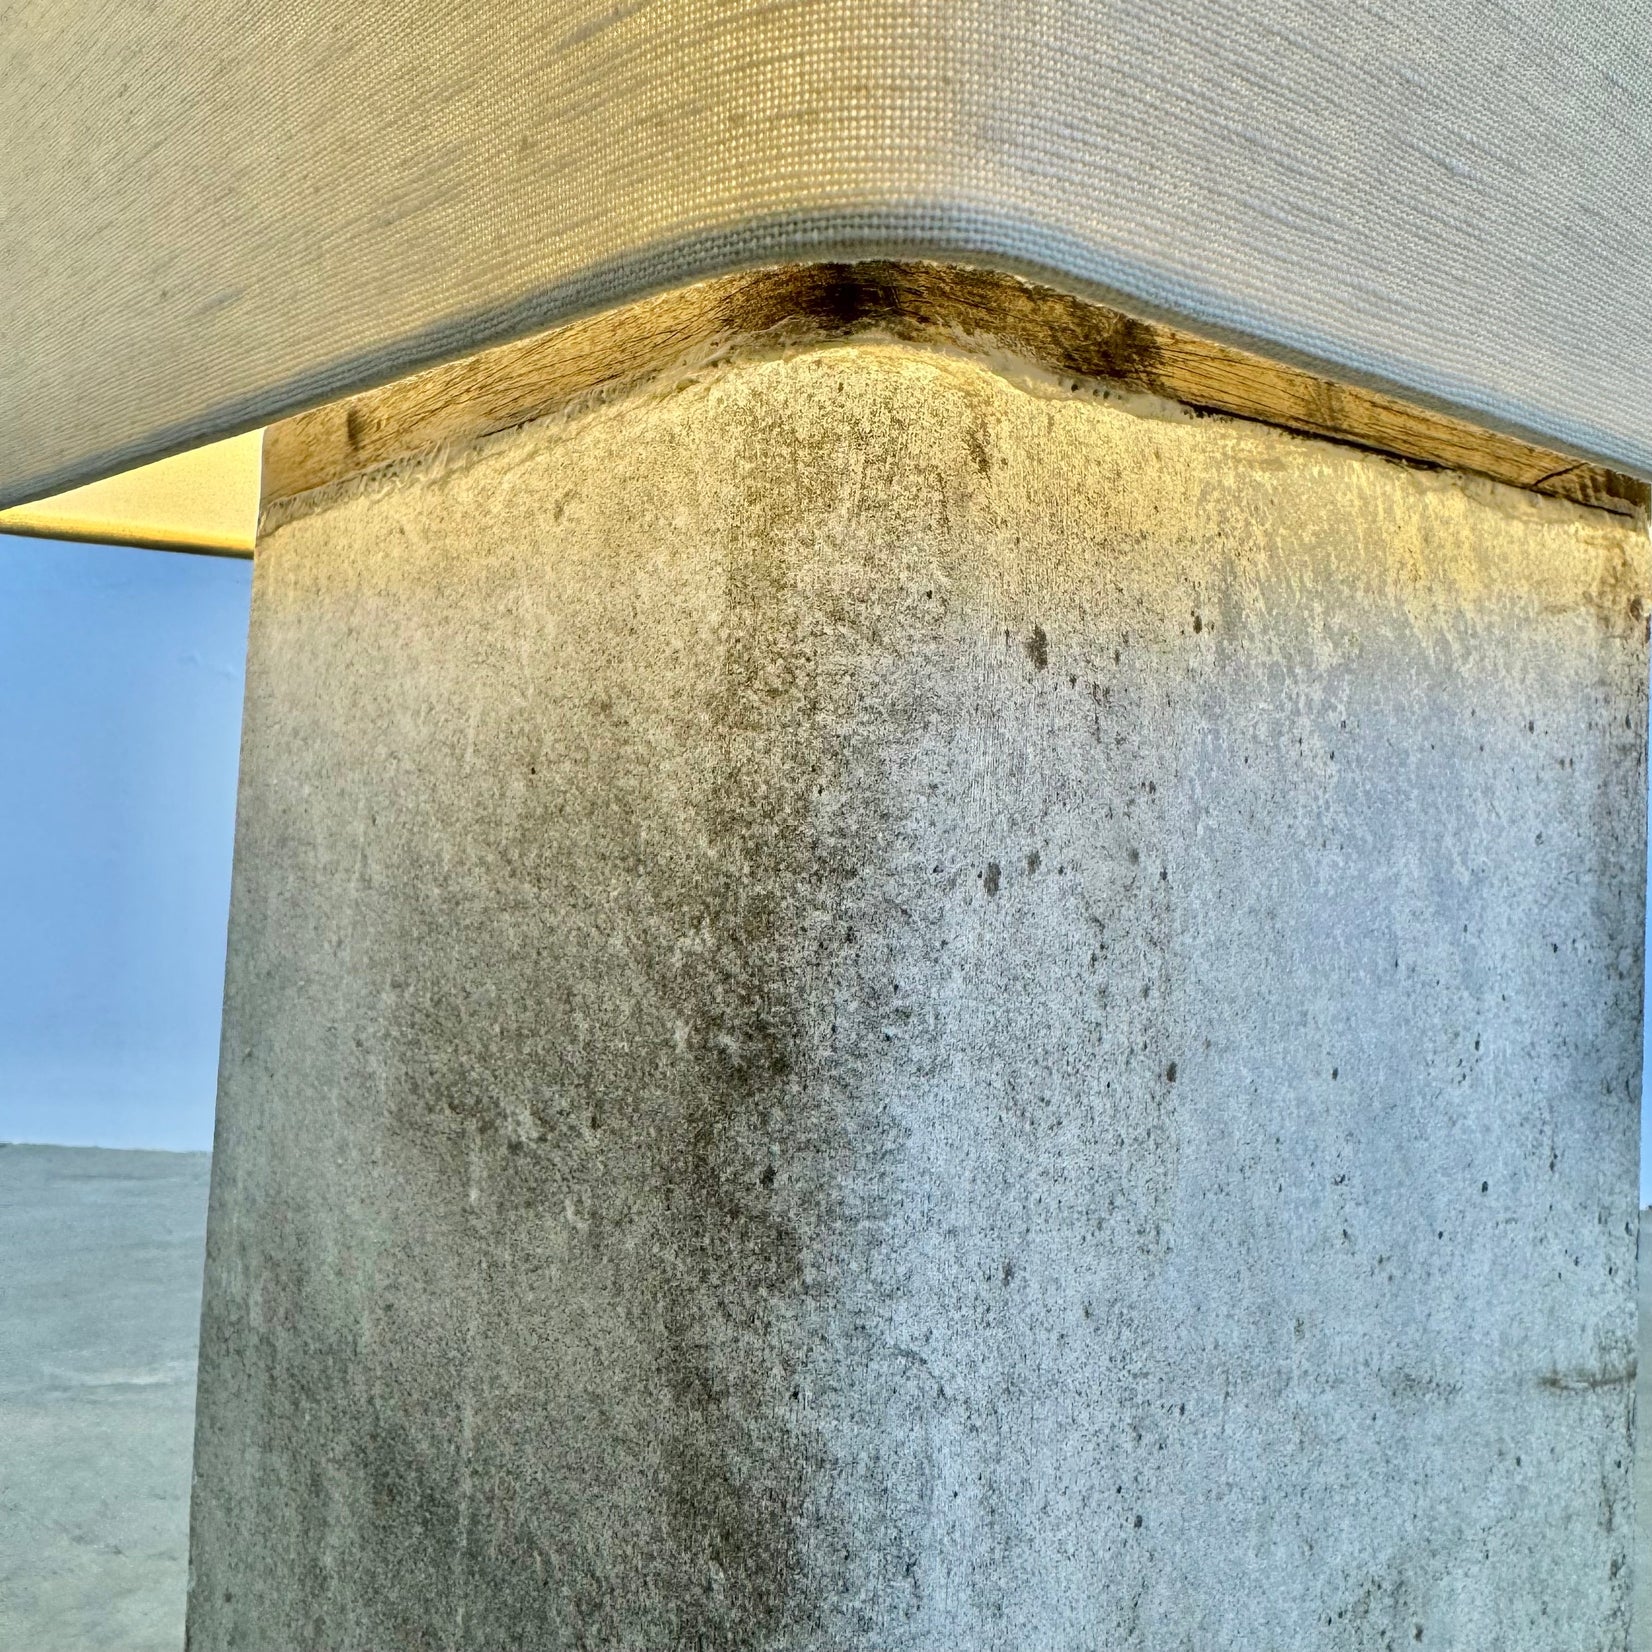 Willy Guhl Large Concrete Table Lamp, 1960s Switzerland